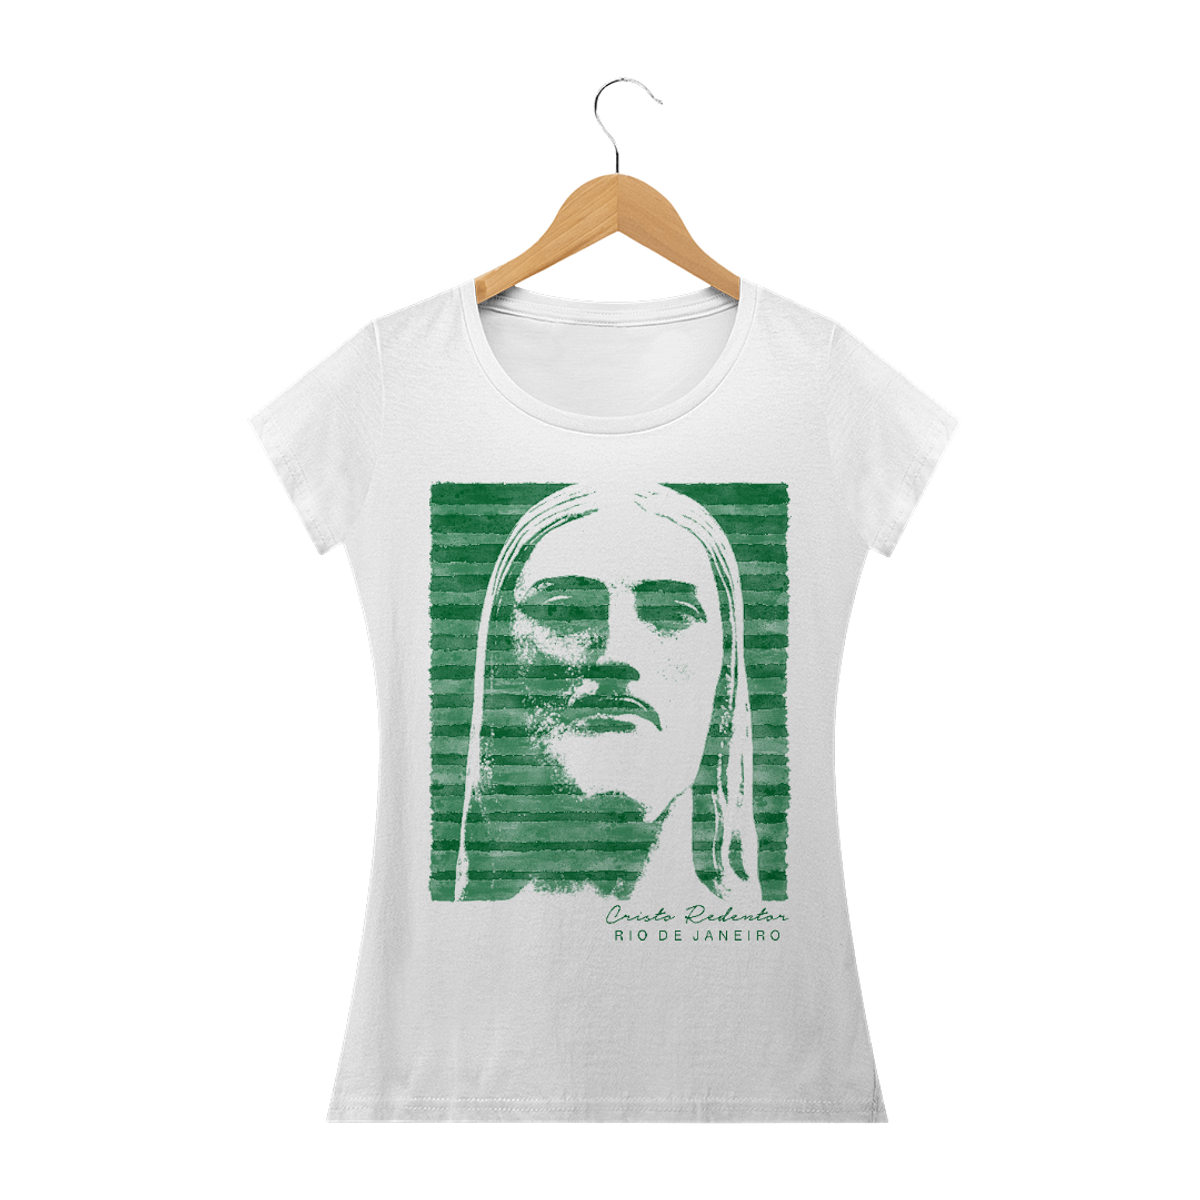 Nome do produto: Camiseta Feminina Cristo Redentor listras verdes